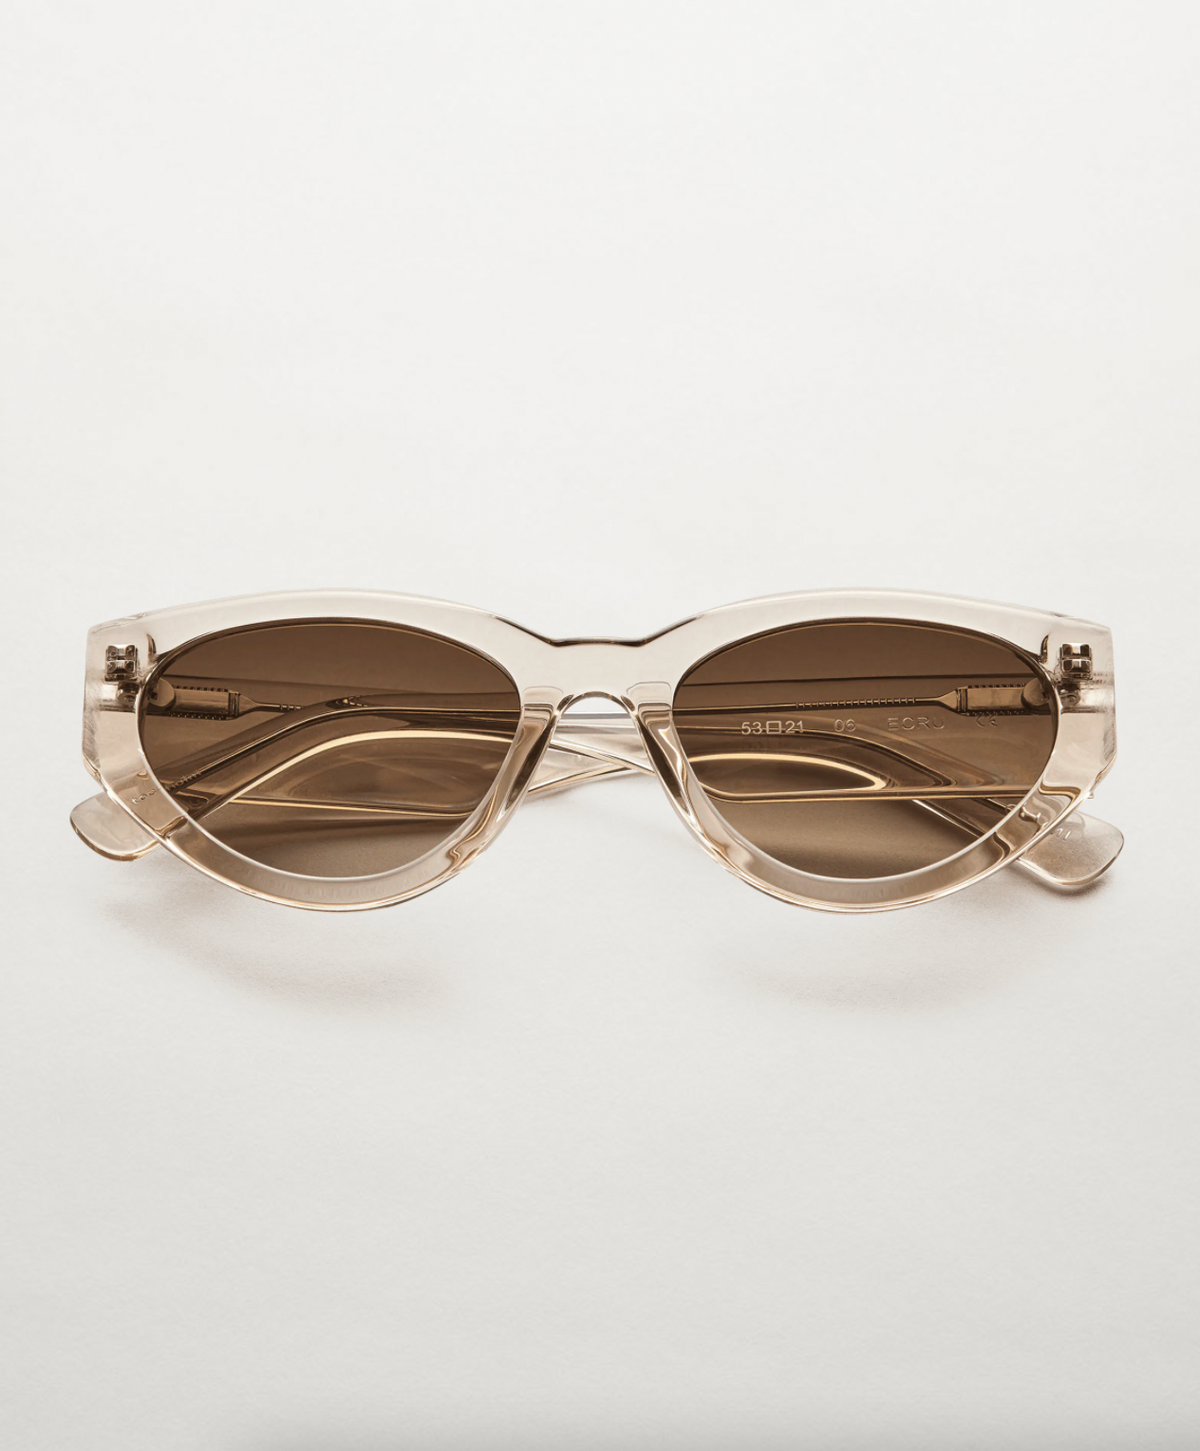 Ecru cats eye sunglasses with a brown lense